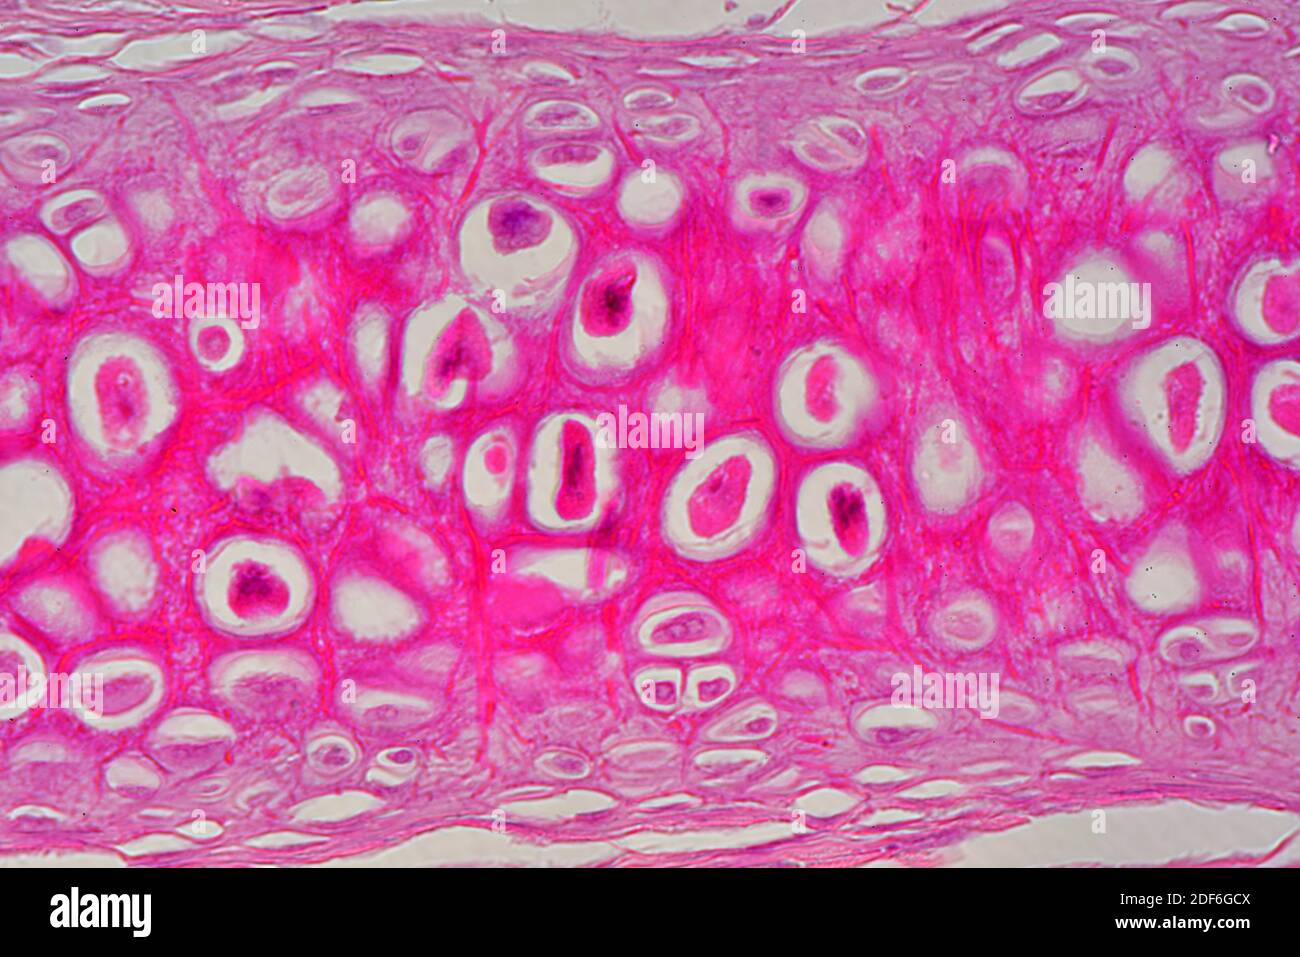 Elastic cartilaginous tissue from the ear showing chondrocytes, elastin fibers and matrix. Optical microscope X400. Stock Photo